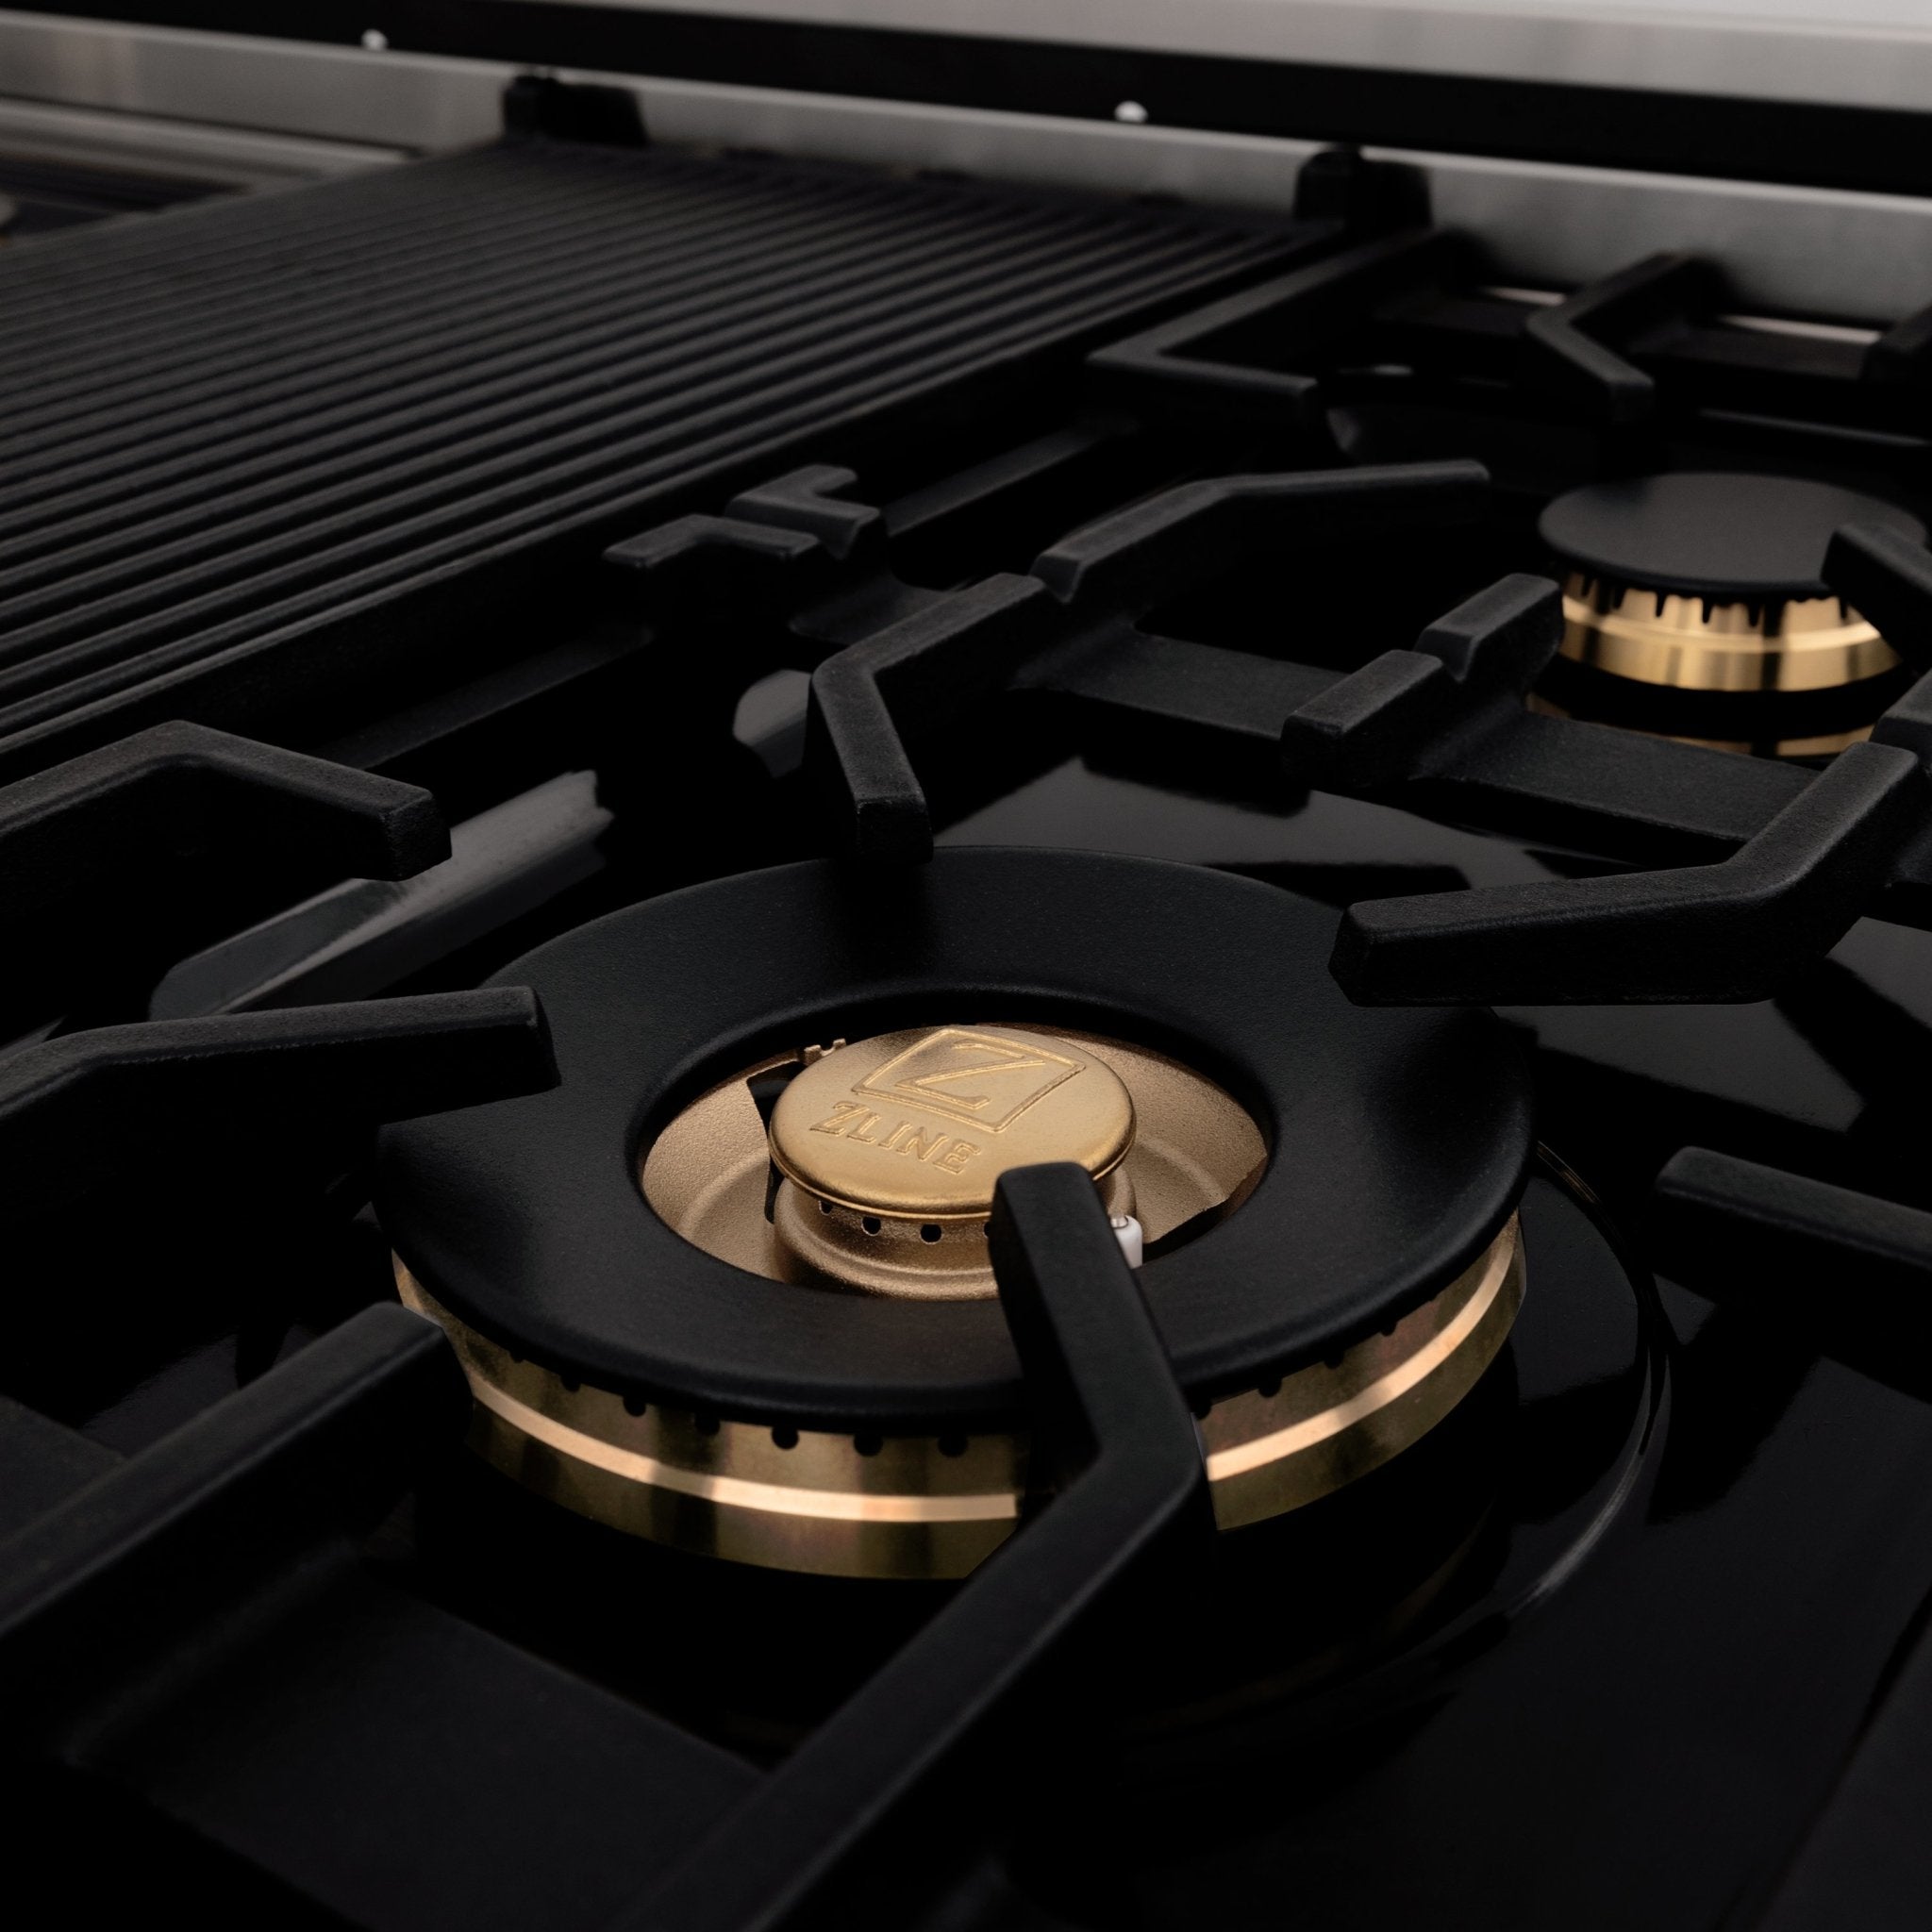 ZLINE Brass Burners on black porcelain cooktop with cast-iron grates.